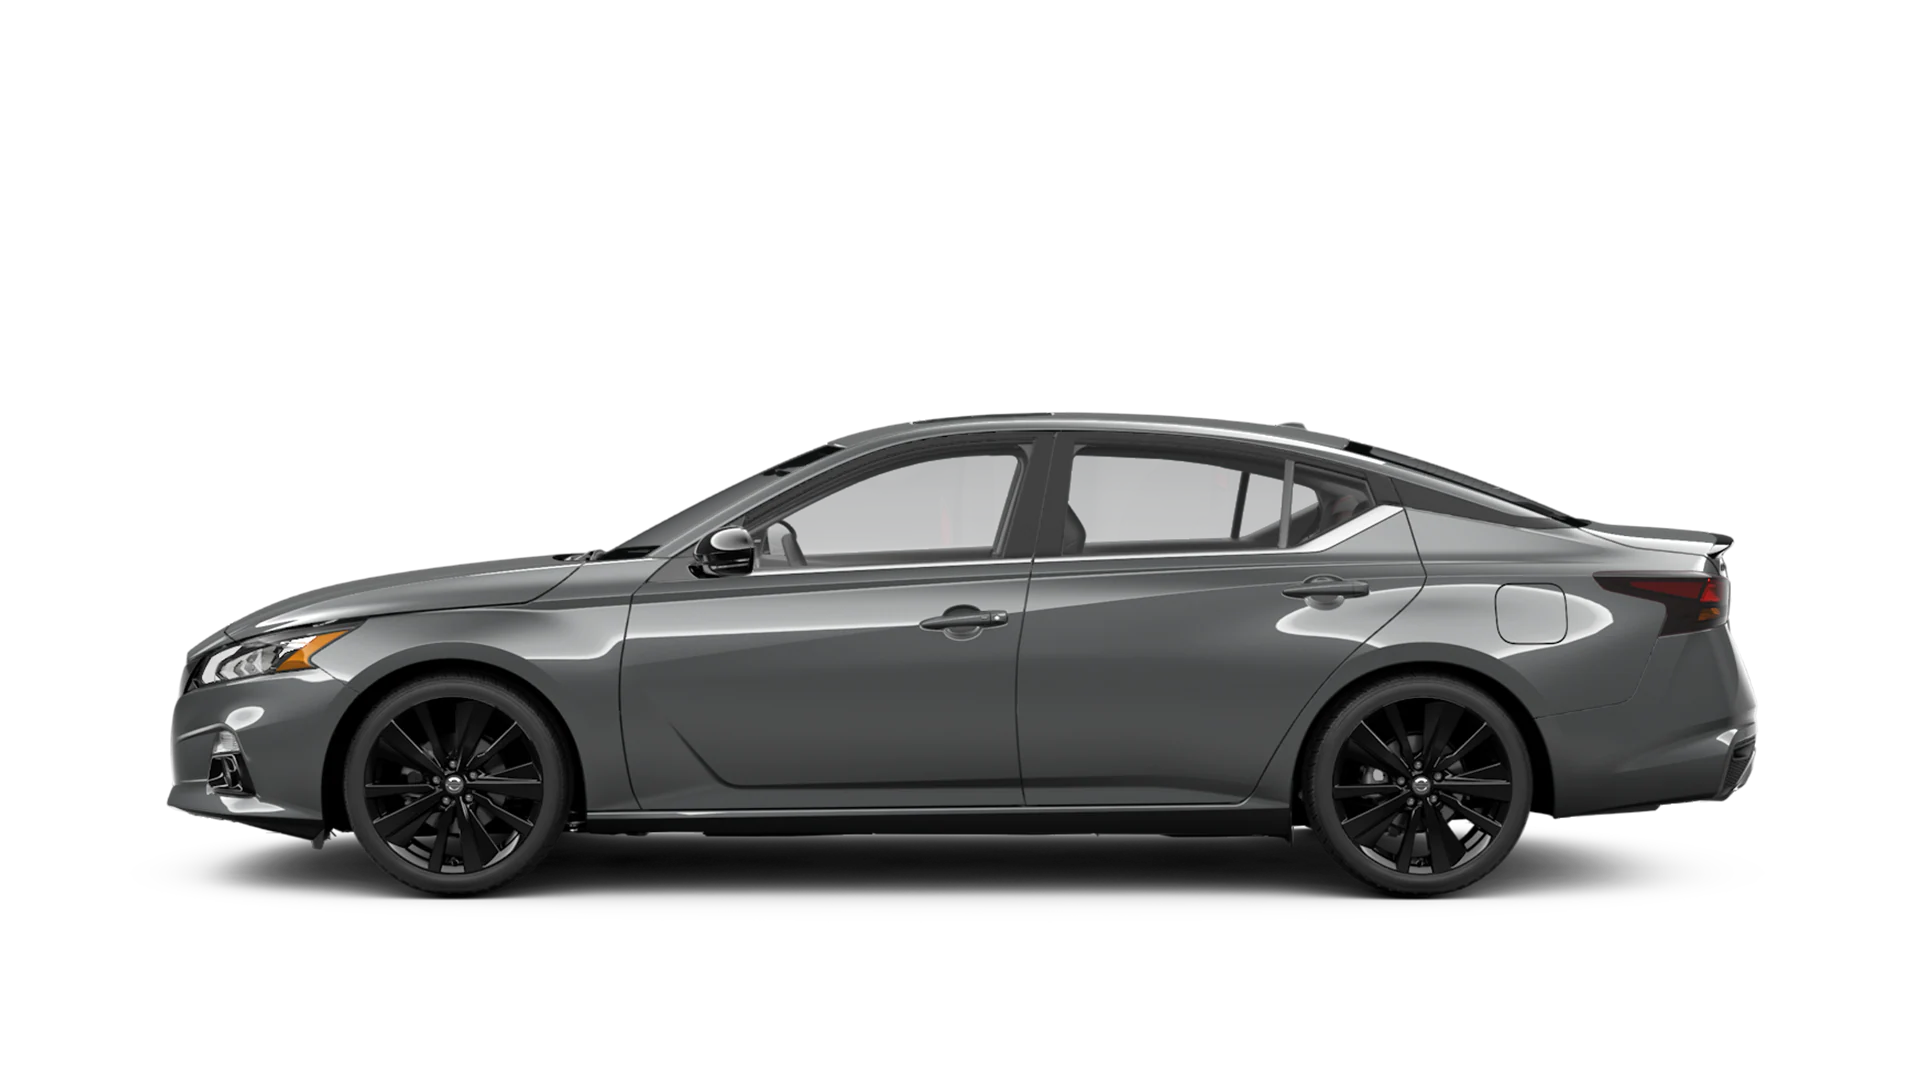 2022 Altima SR Midnight Edition INTELLIGENT AWD | Benton Nissan of Oxford in Oxford AL